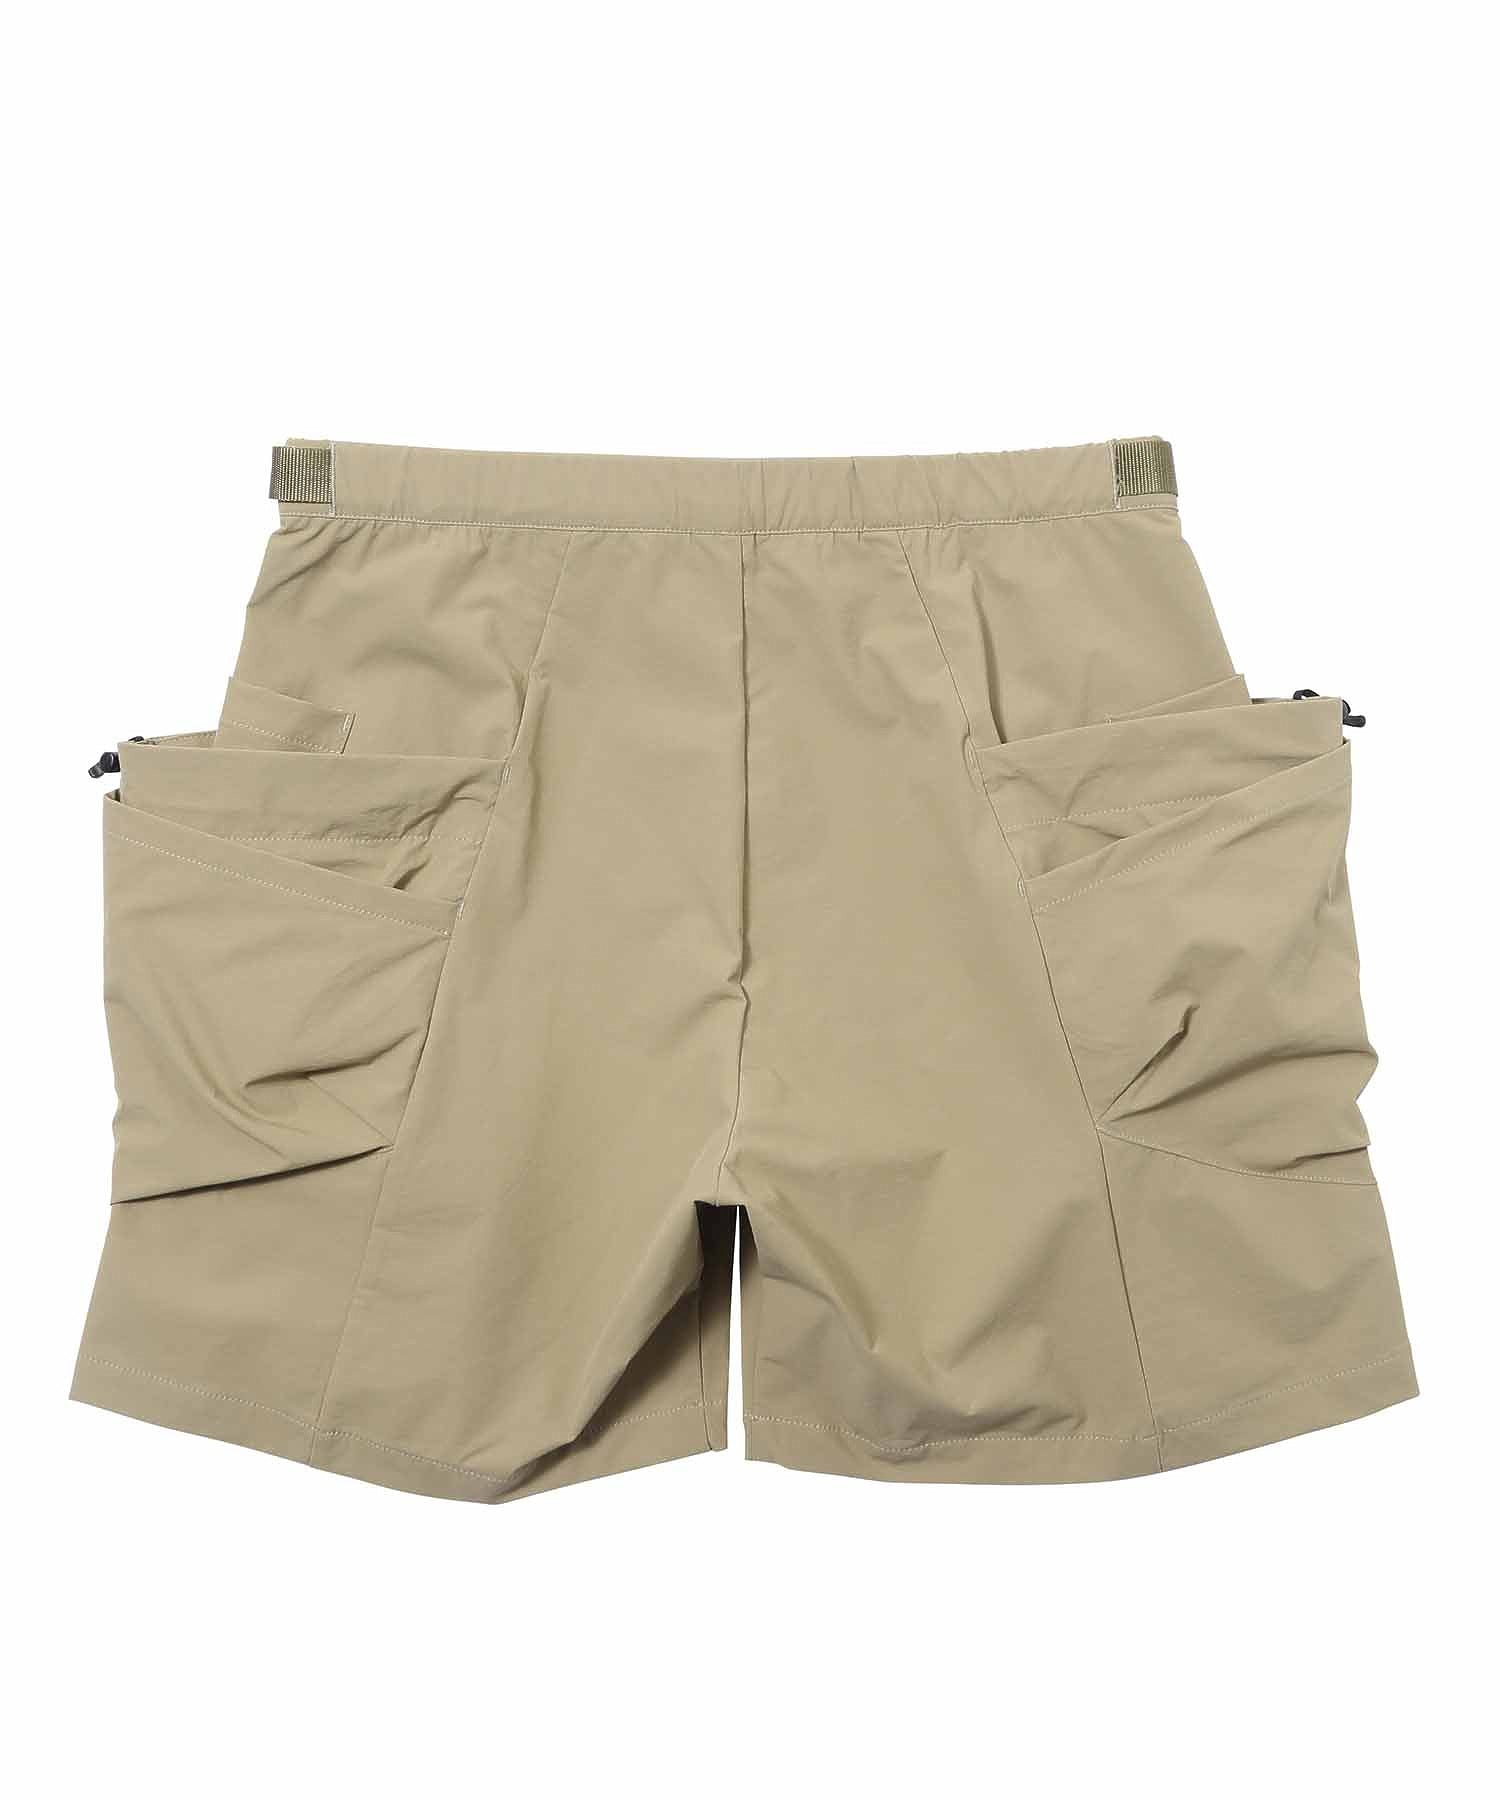 Karrimor /カリマー/ rigg shorts 101372